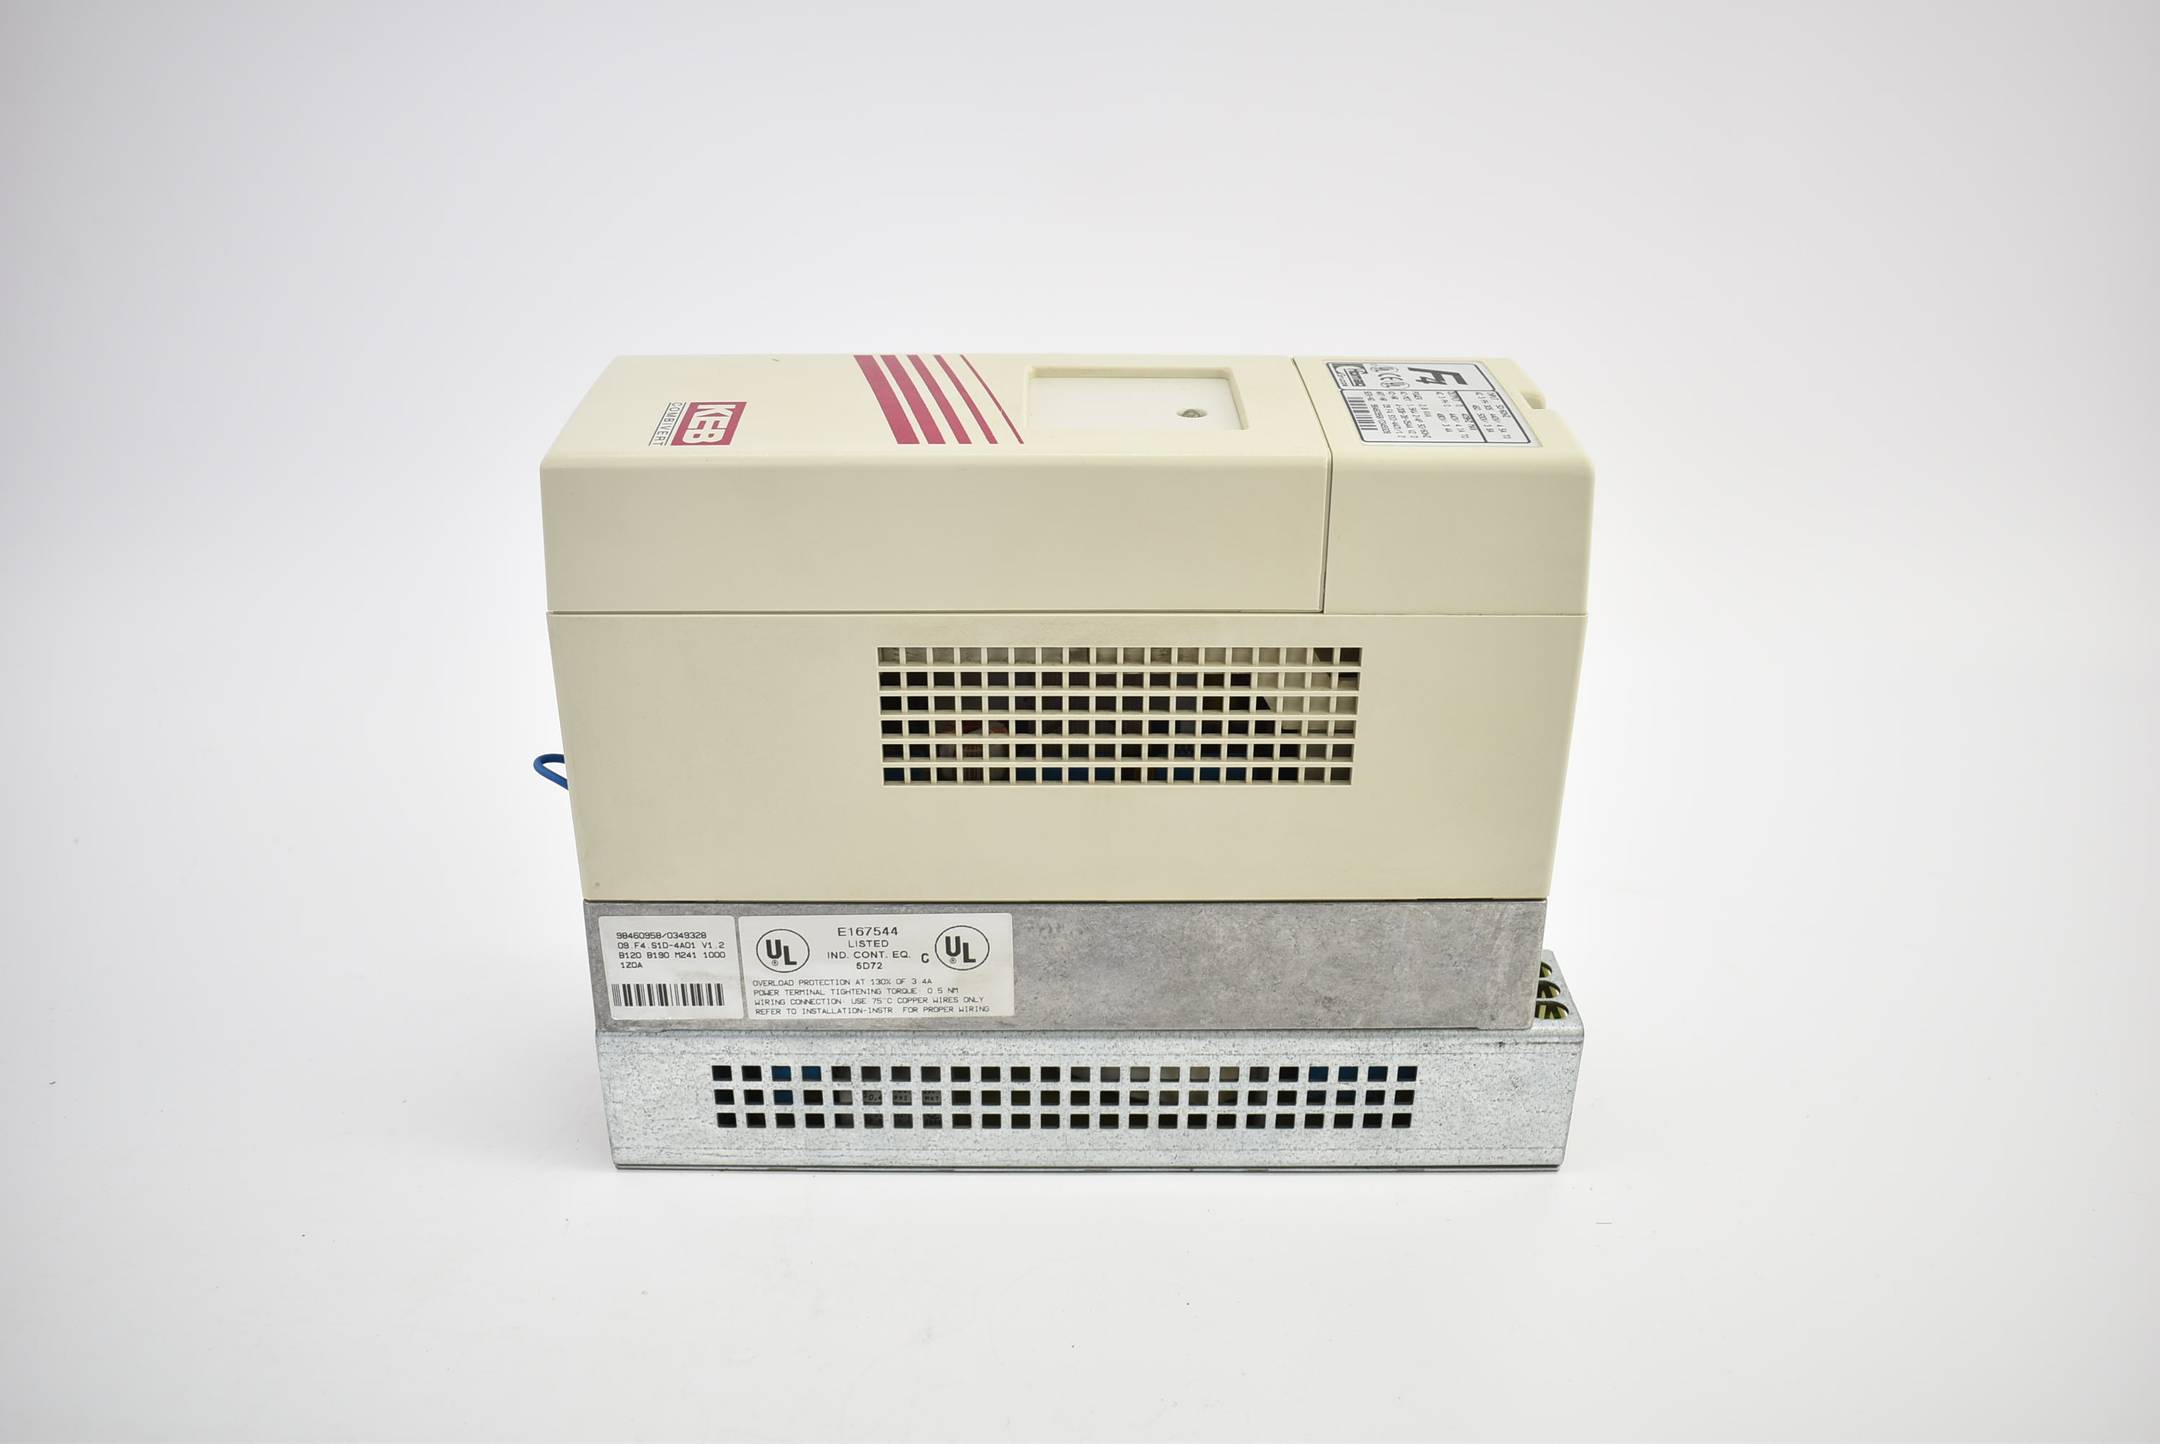 KEB Combivert Frequenzumrichter 09.F4.S1D-4A01 V1.2 ( E167544 )